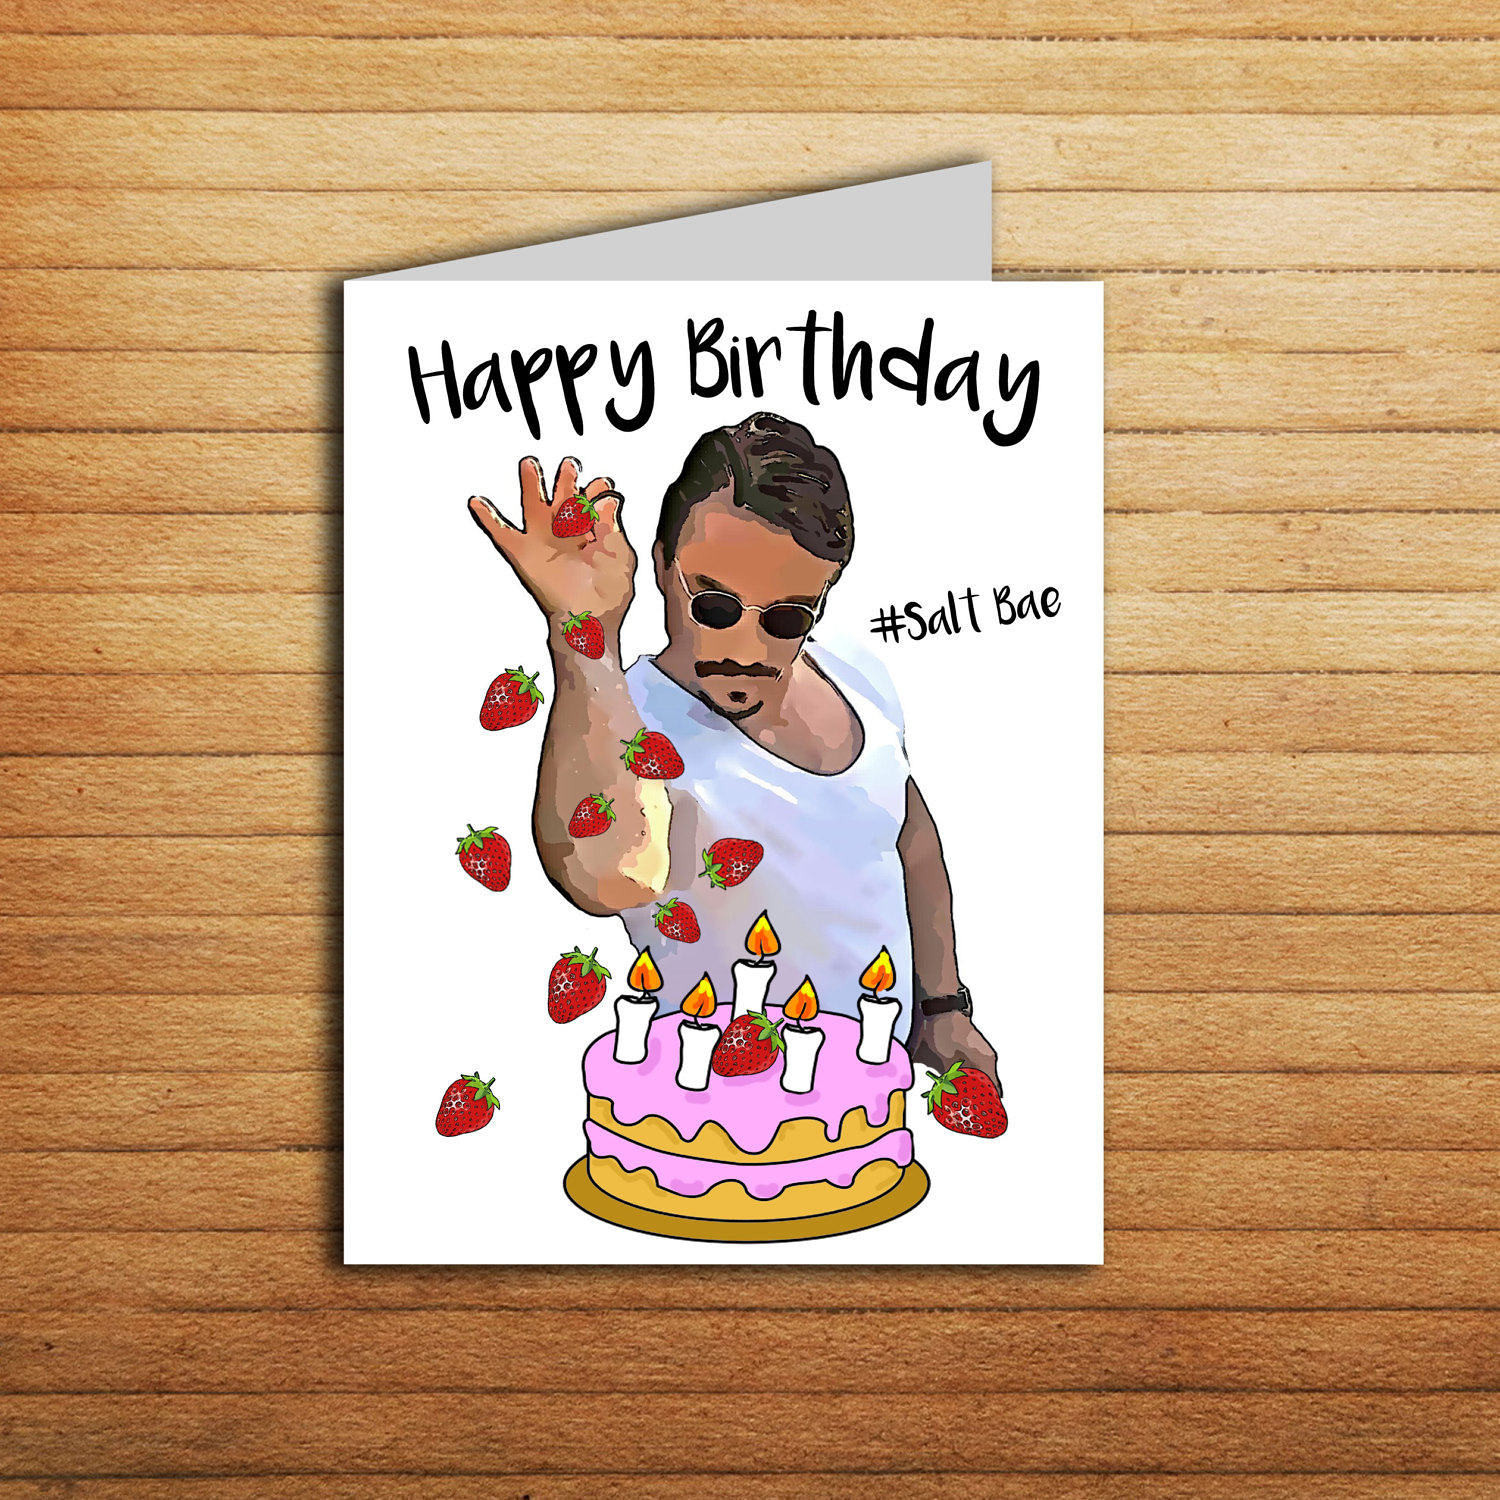 Free Funny Printable Birthday Cards
 Salt Bae Birthday Card Printable Funny Birthday Card for